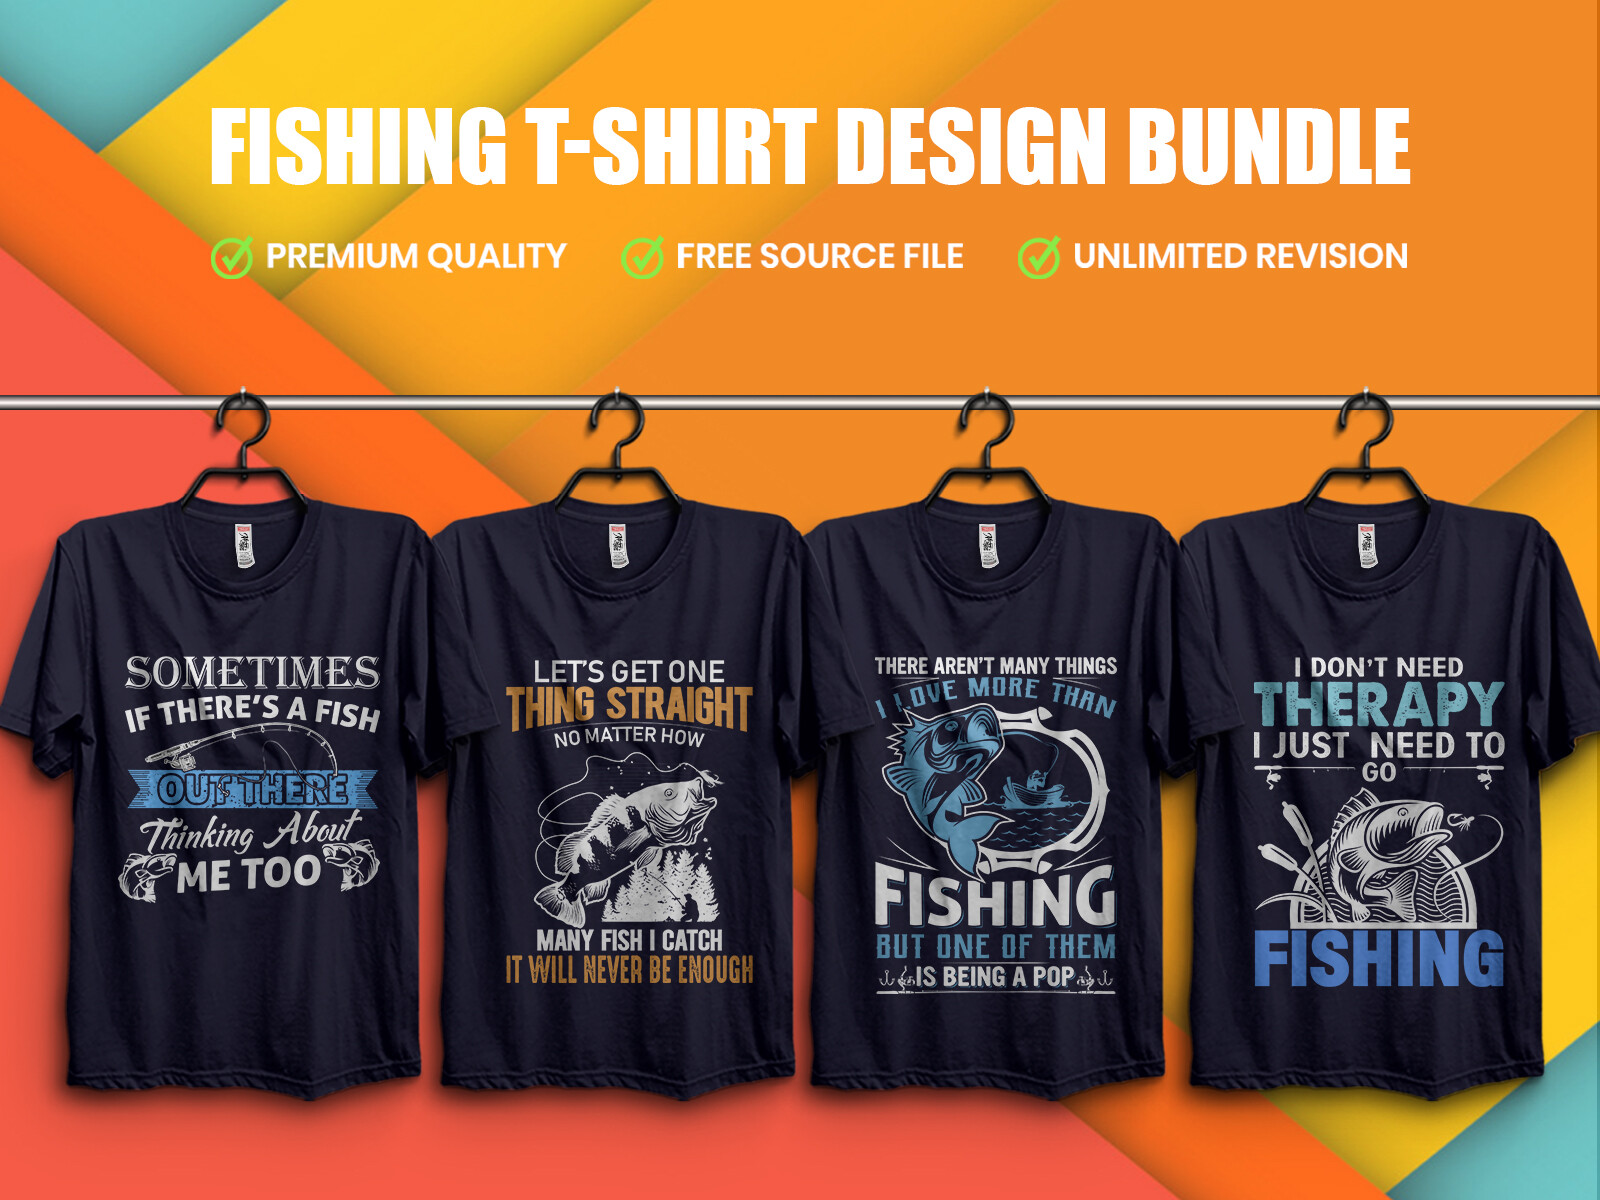 https://cdnb.artstation.com/p/assets/images/images/025/044/015/large/roger-islam-fishing-t-shirt-design-2.jpg?1584402855